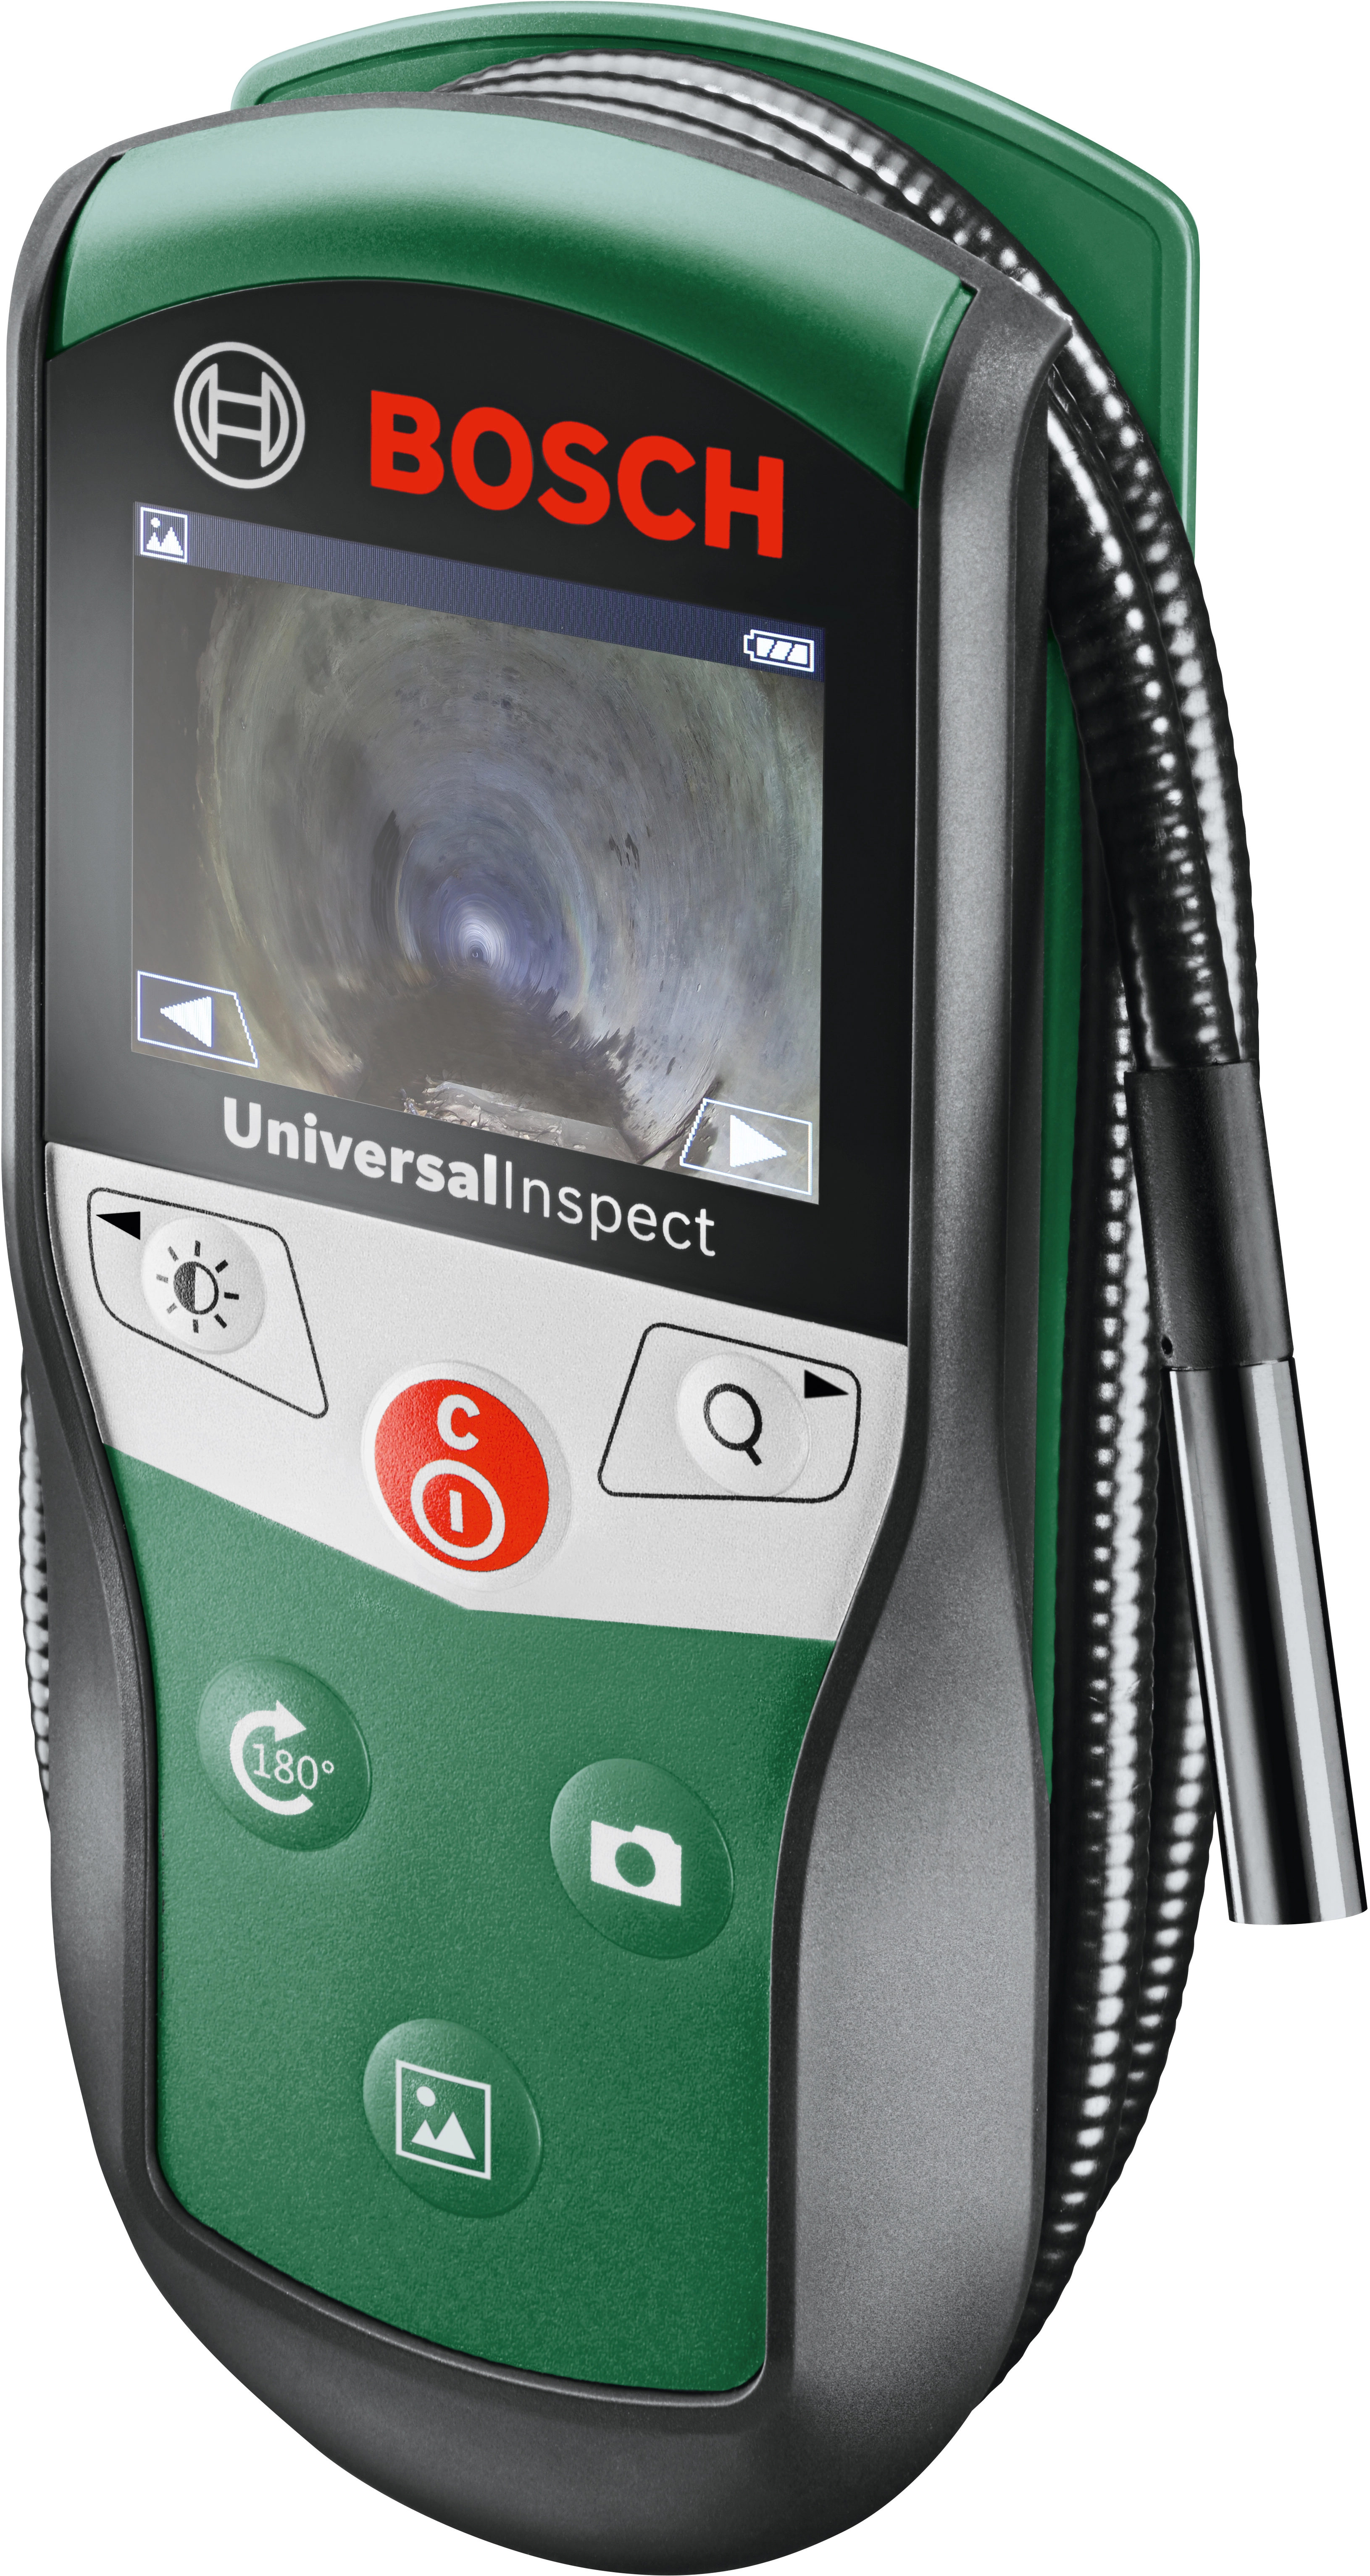 Bosch Digitales Ortungsgerät Universal Detect max. Ortungstiefe